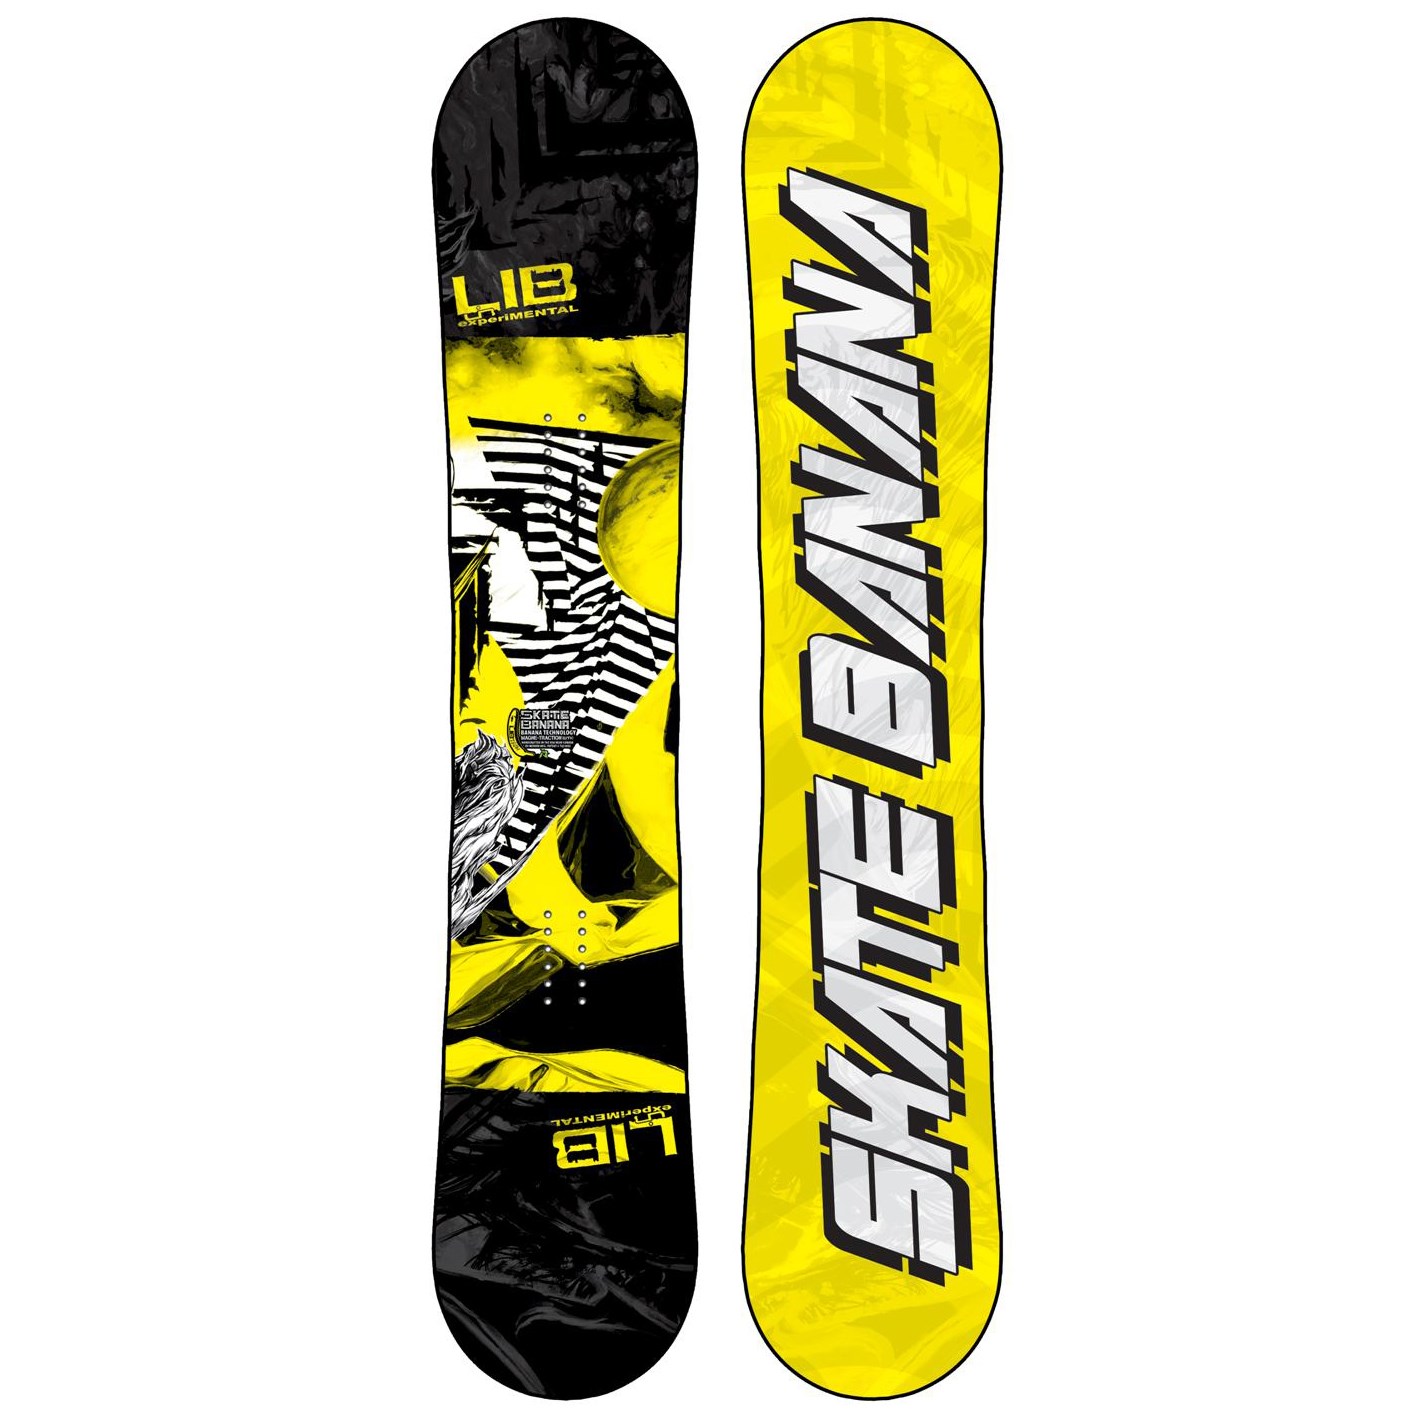 Lib Tech Skate Banana Snowboard - Blem 2014 evo